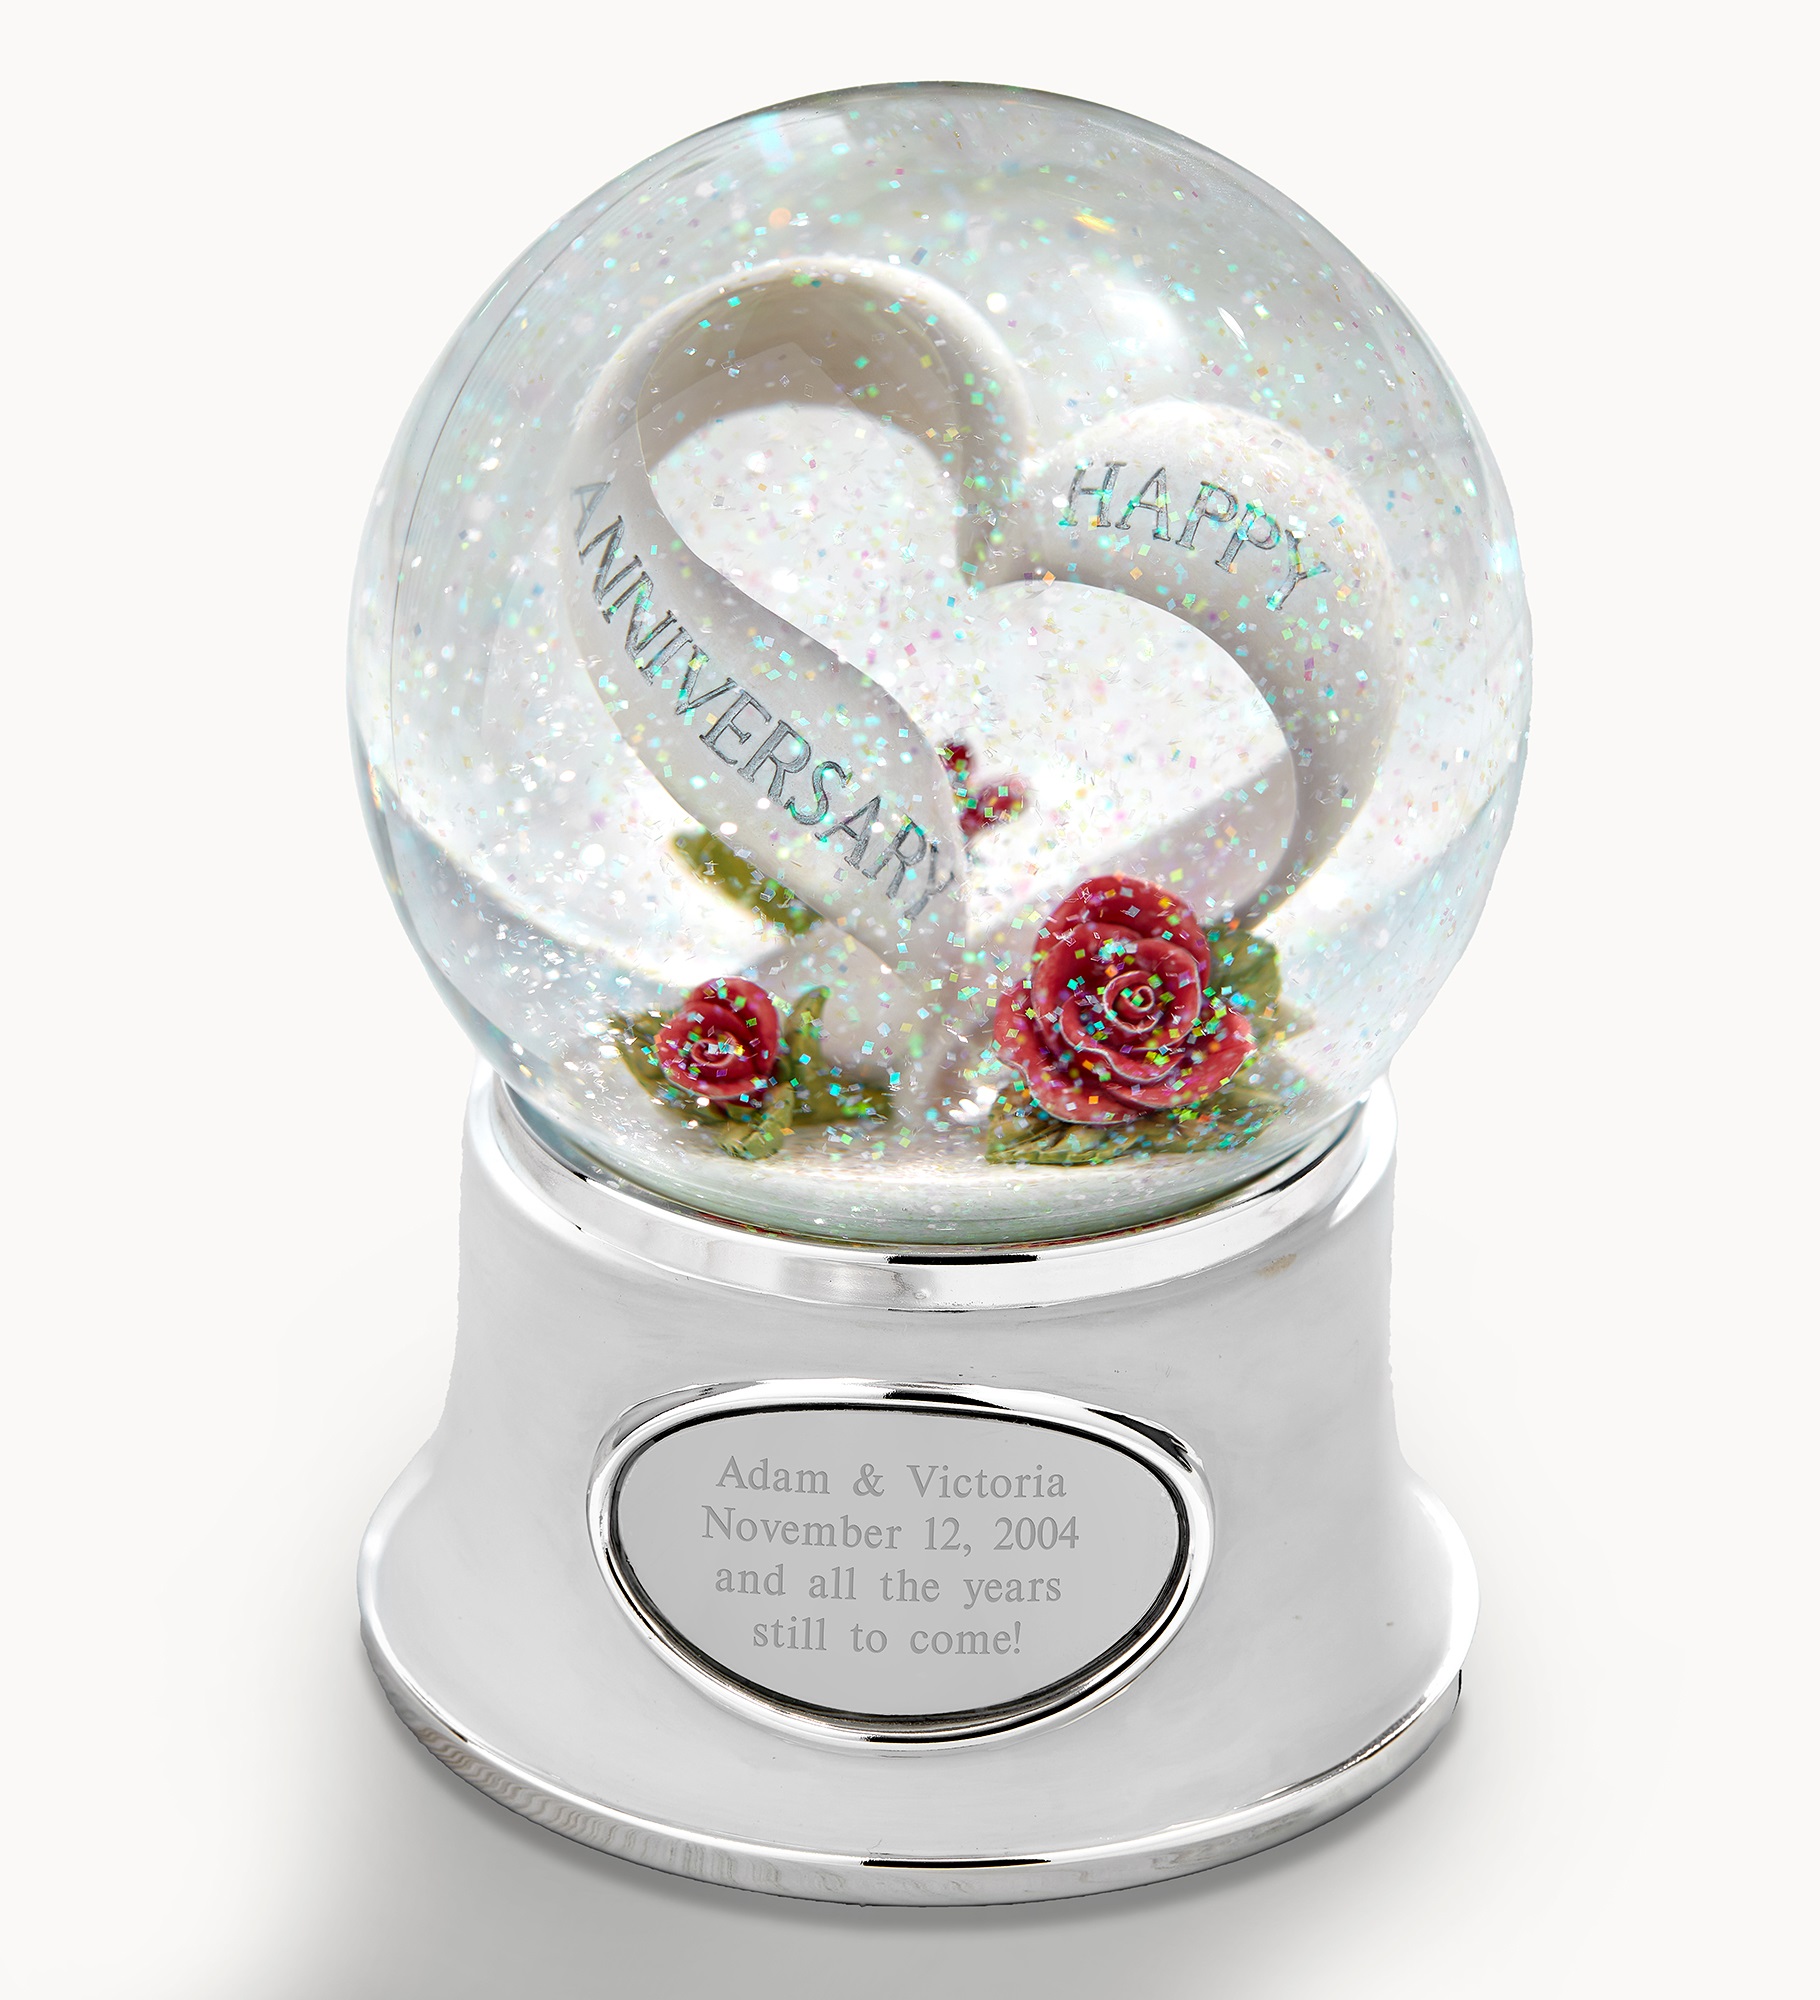  Engraved Anniversary Heart Snow Globe